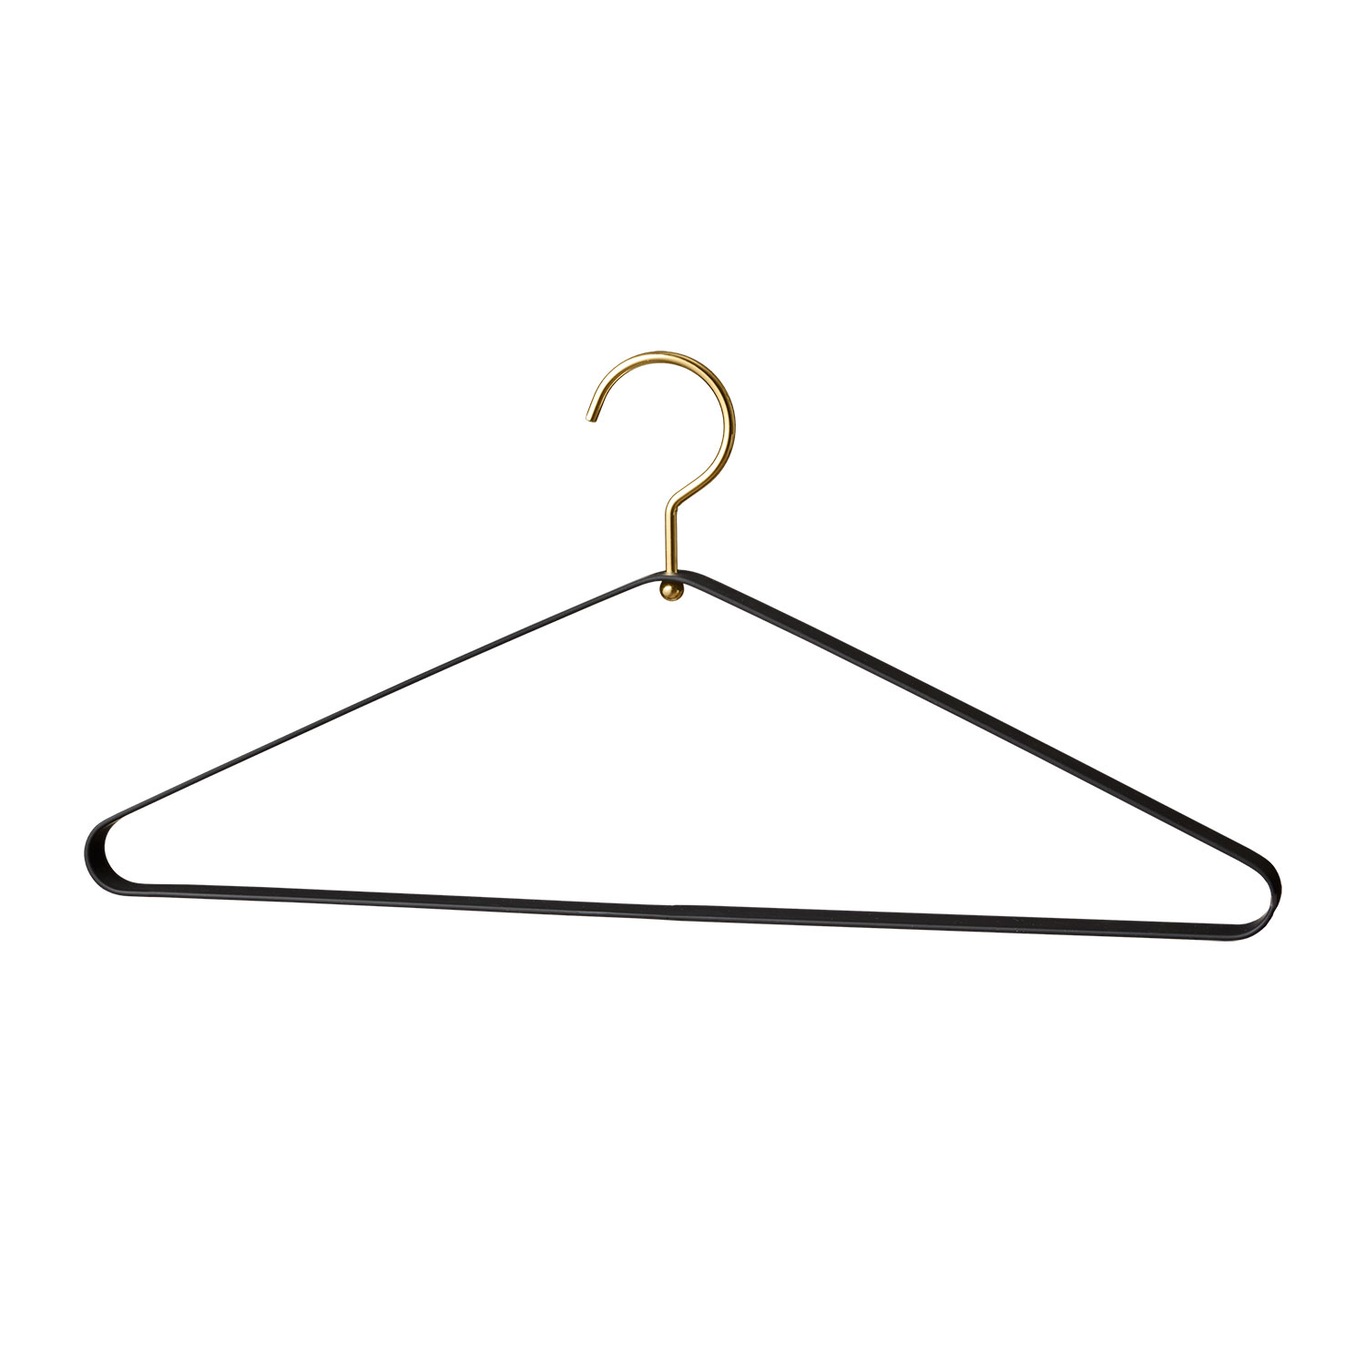 https://royaldesign.com/image/2/aytm-vestis-clothes-hanger-set-of-2-3?w=800&quality=80